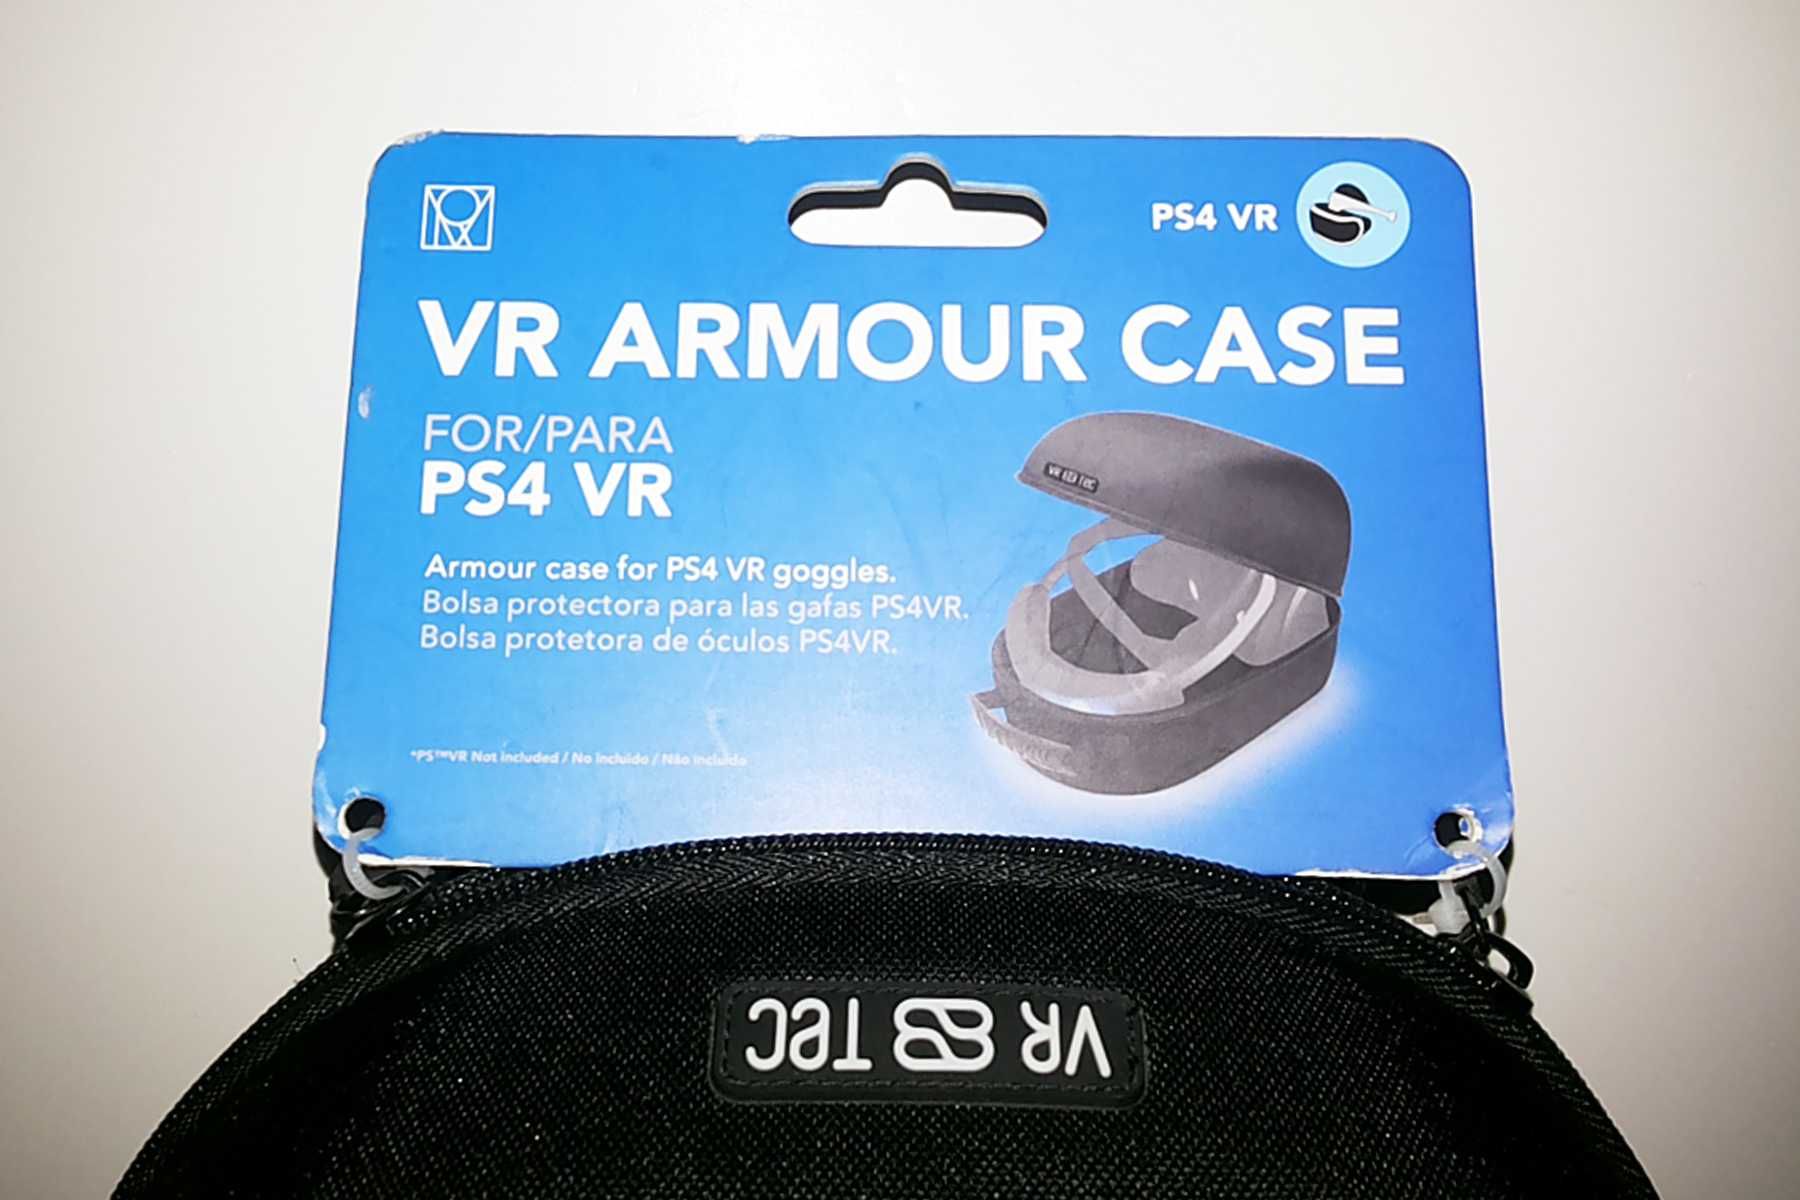 Ps4 - VR Armour Case - Acessório para guardar os Óculos Playstation VR